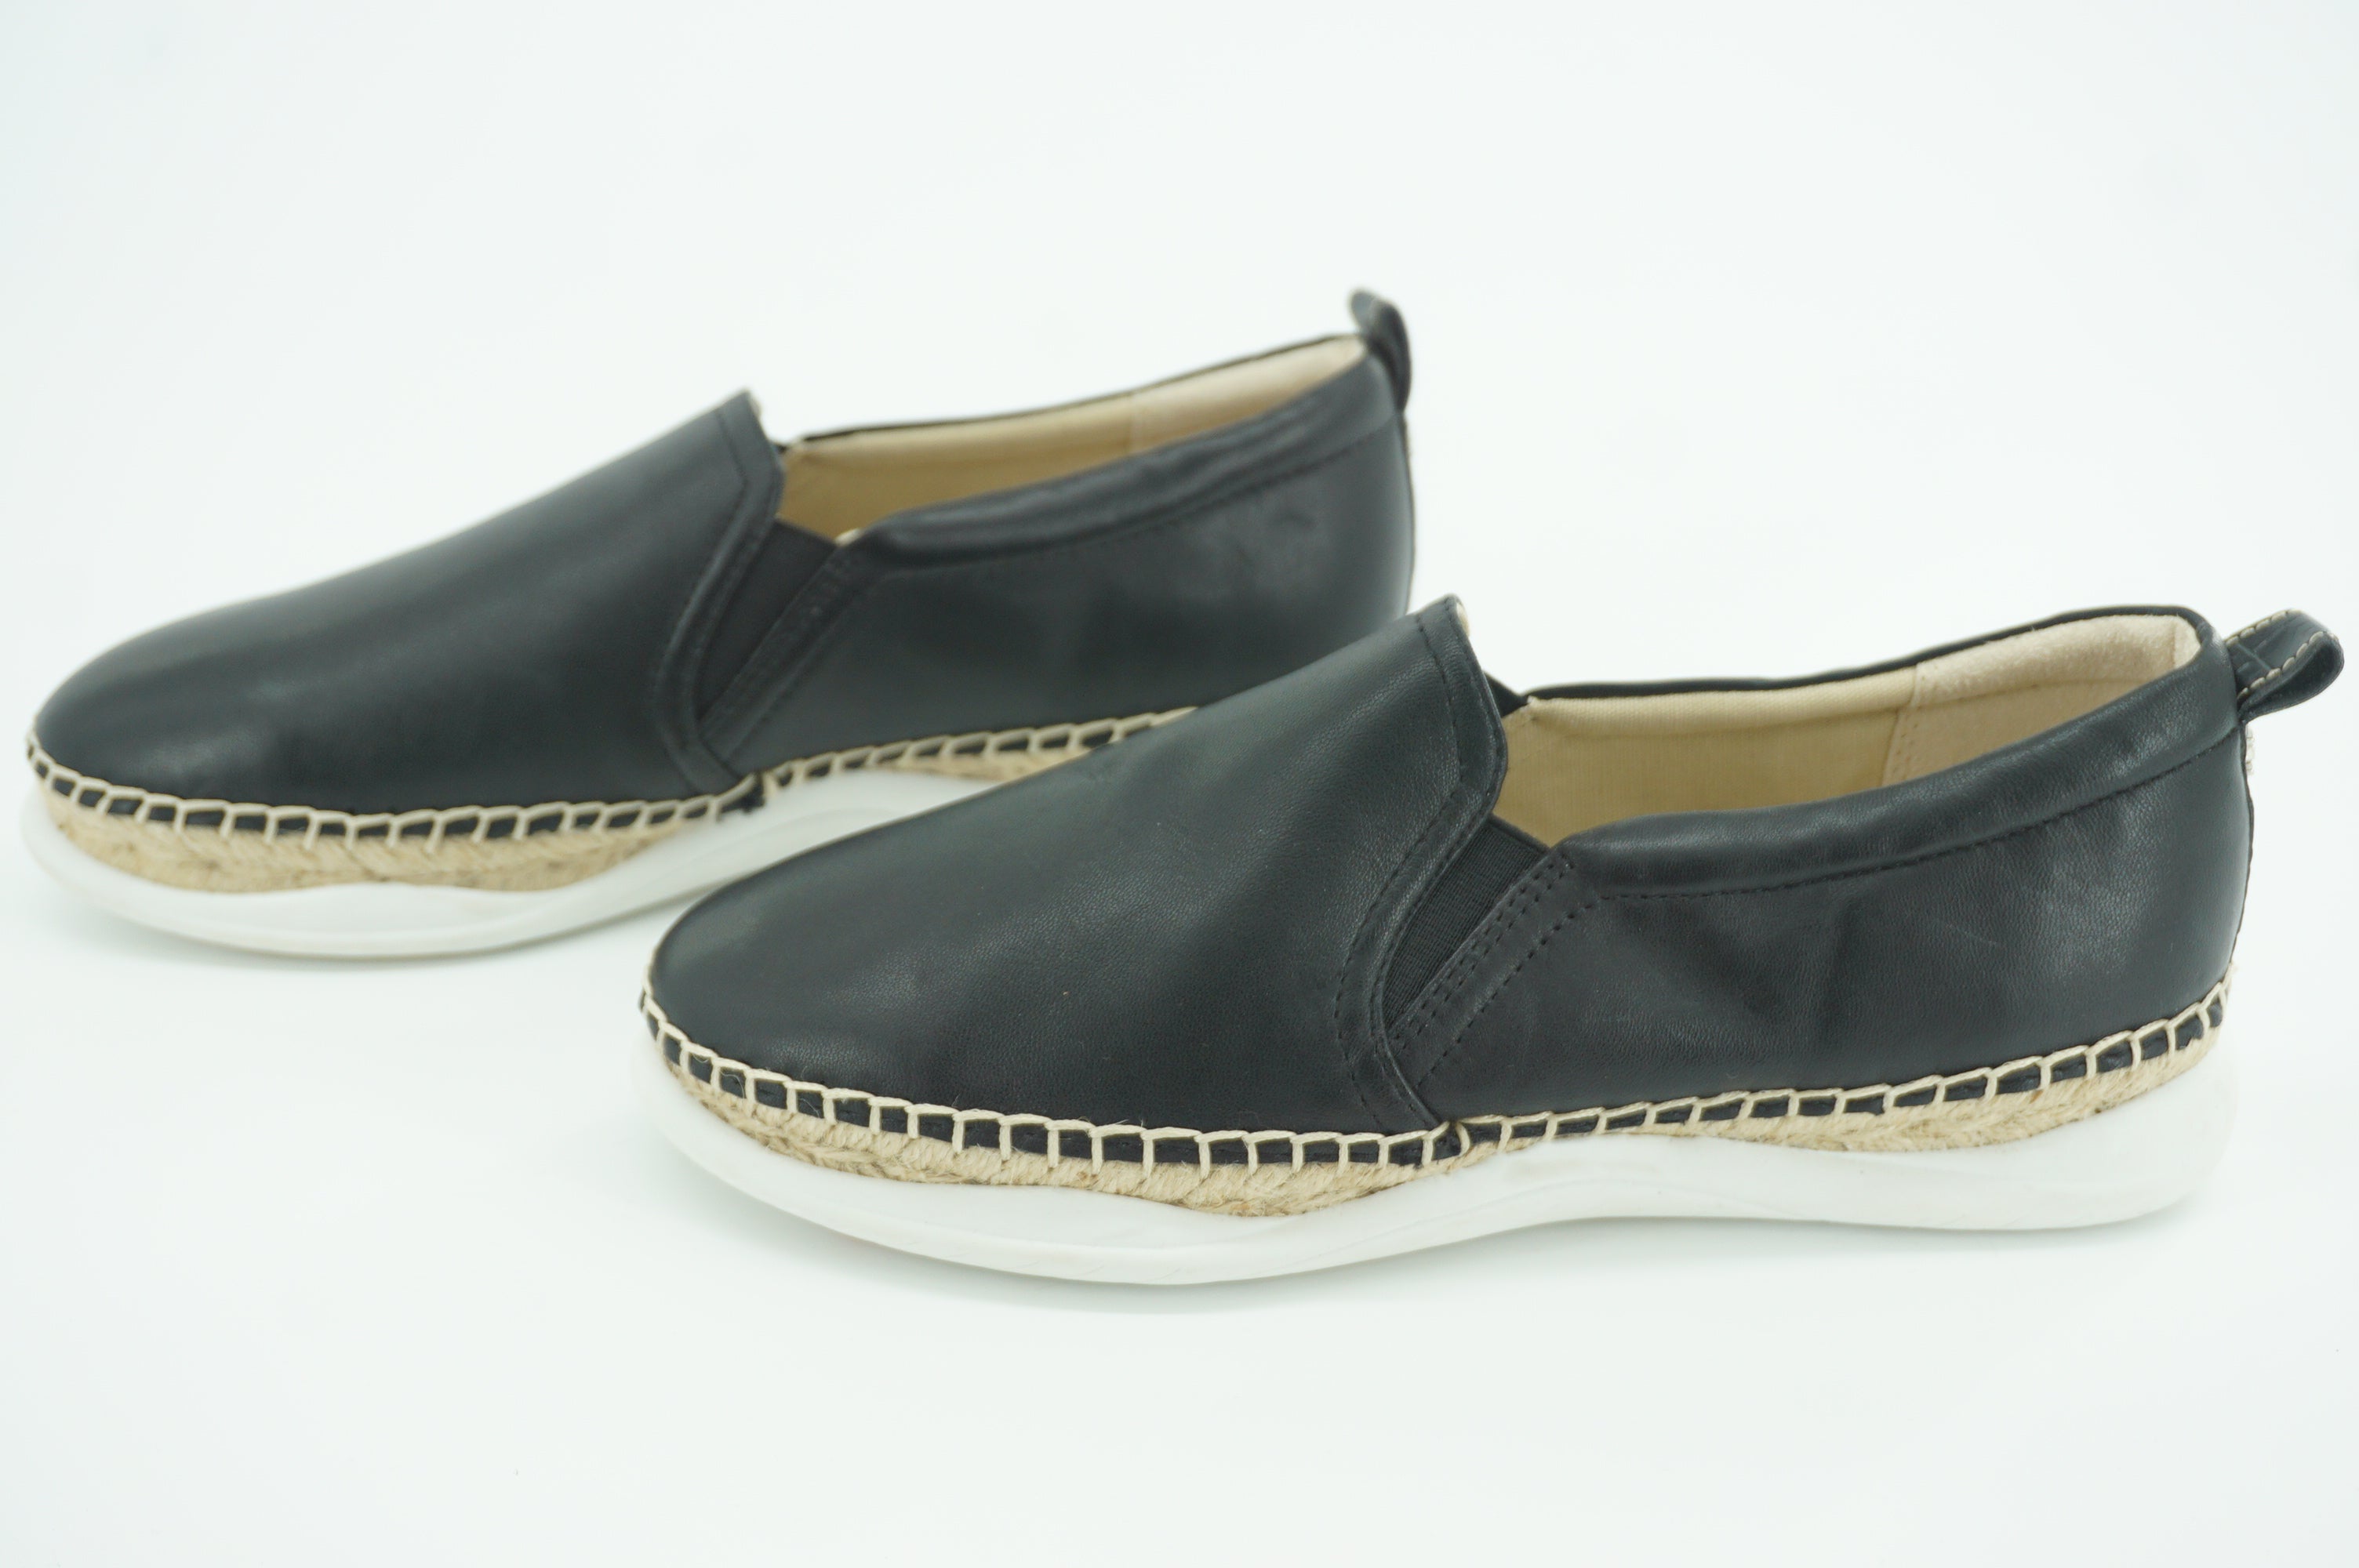 Sam Edelman Kassie Black Leather espadrille Flat Sneaker SZ 7 New $130